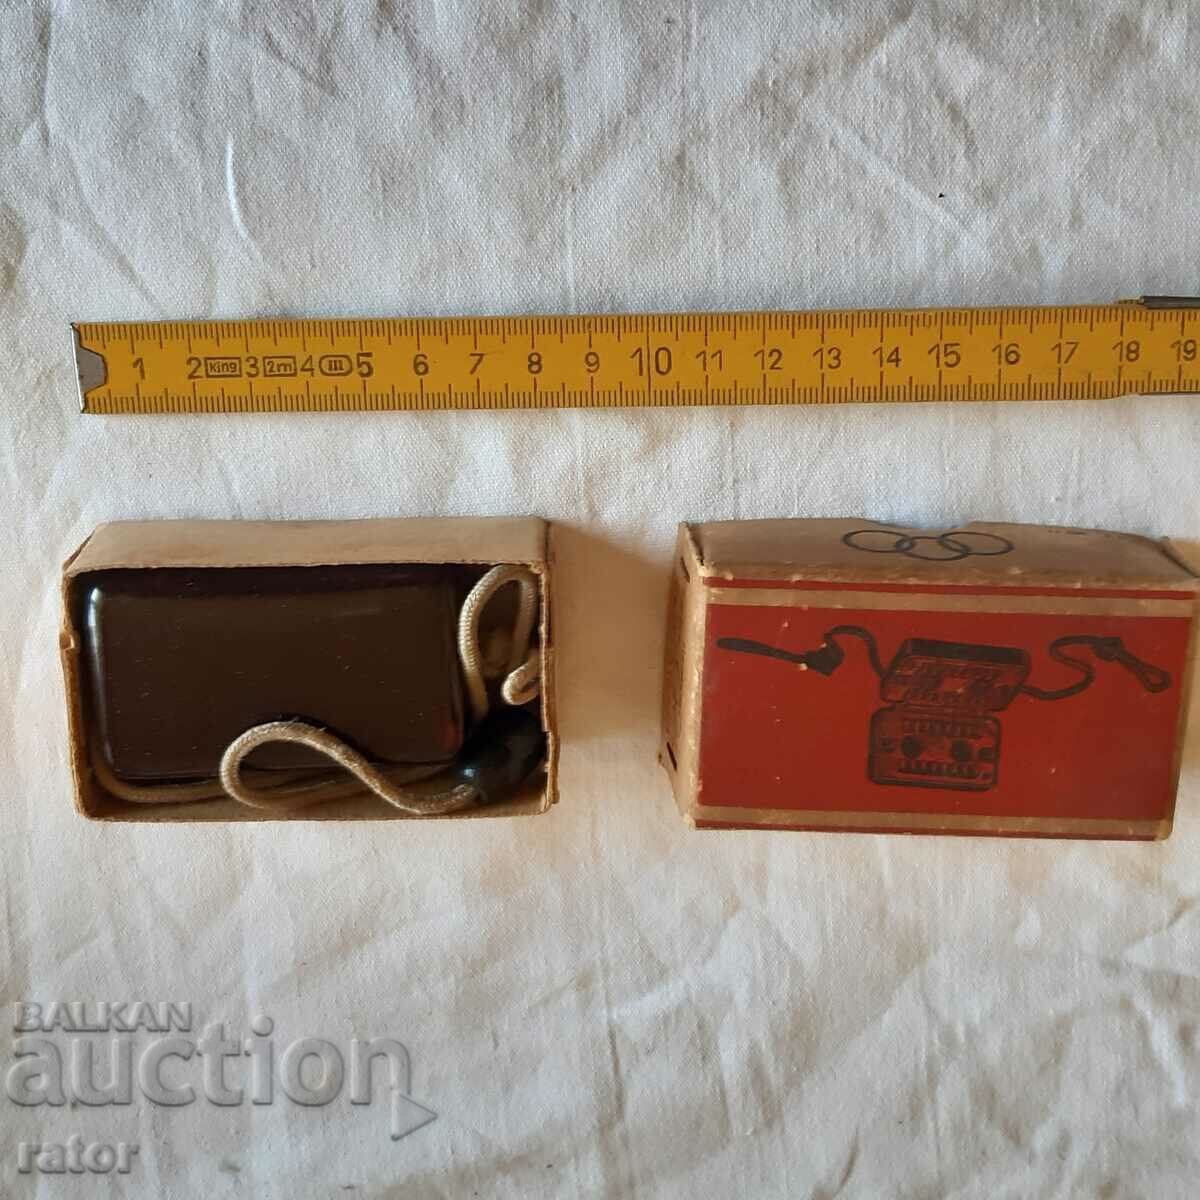 Old sharpener, a device for sharpening razor blades